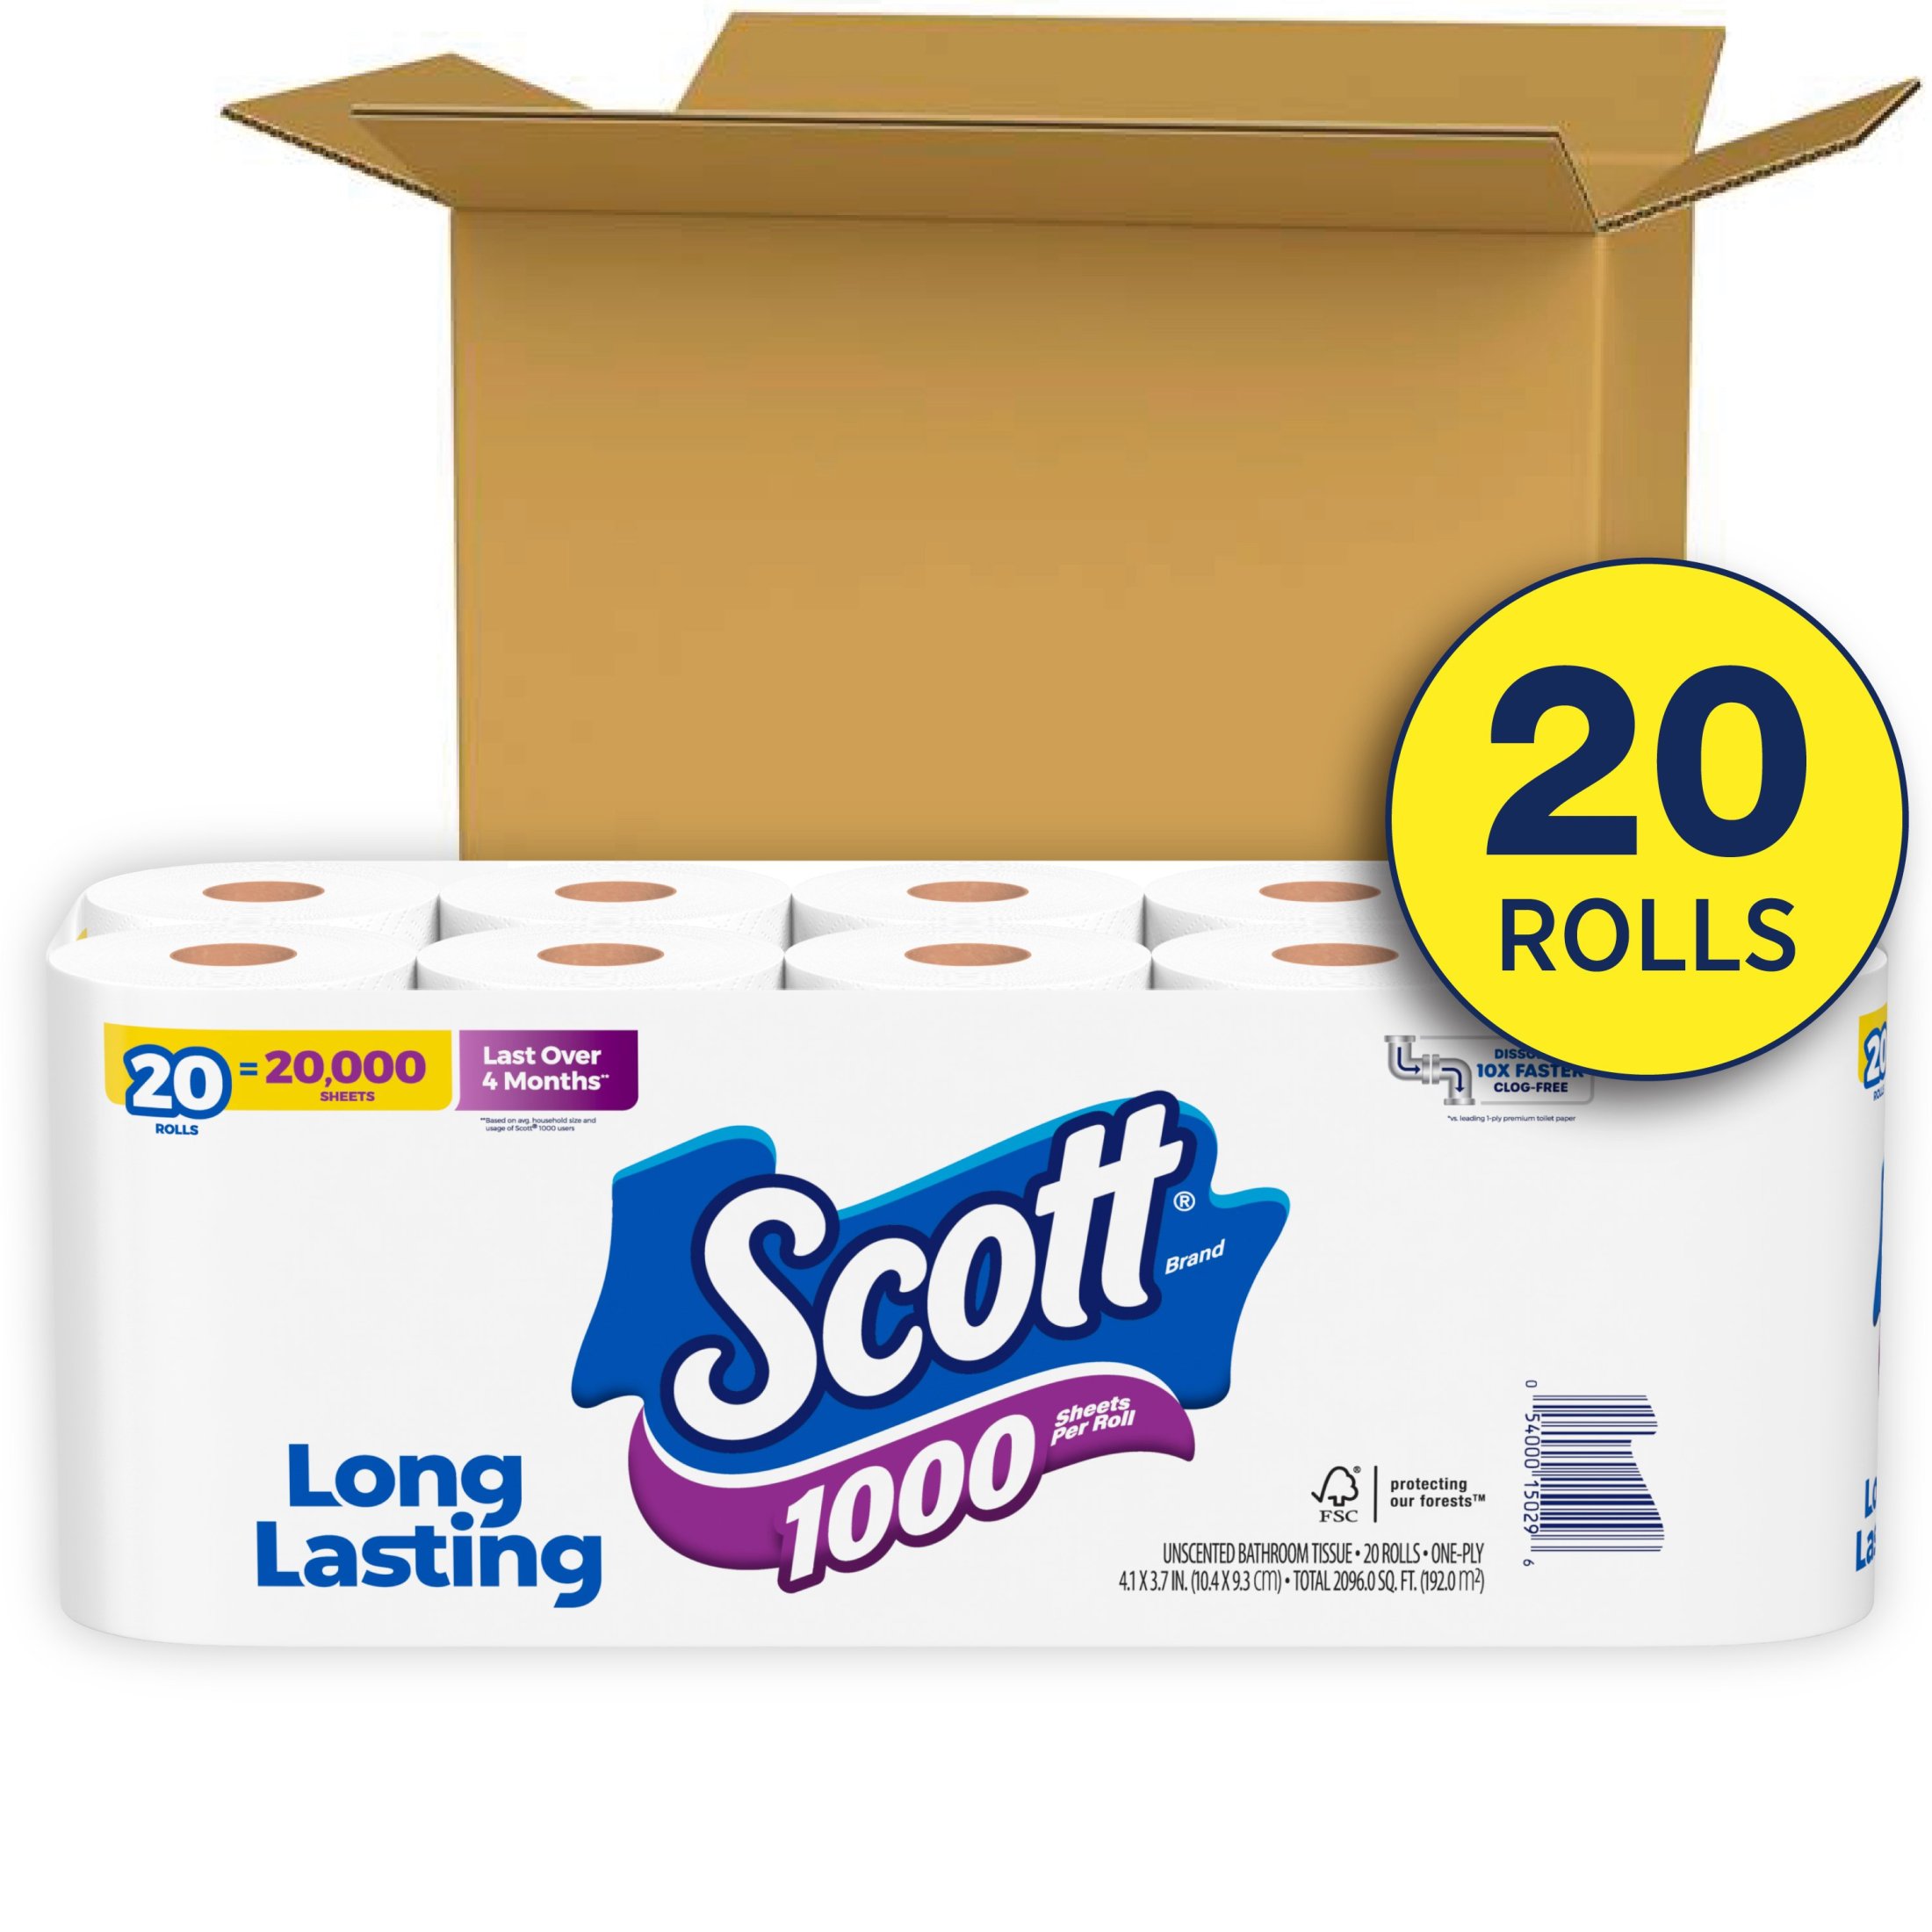 Scott 1000 Toilet Paper, 20 Rolls, 1,000 Sheets Per Roll - image 2 of 10